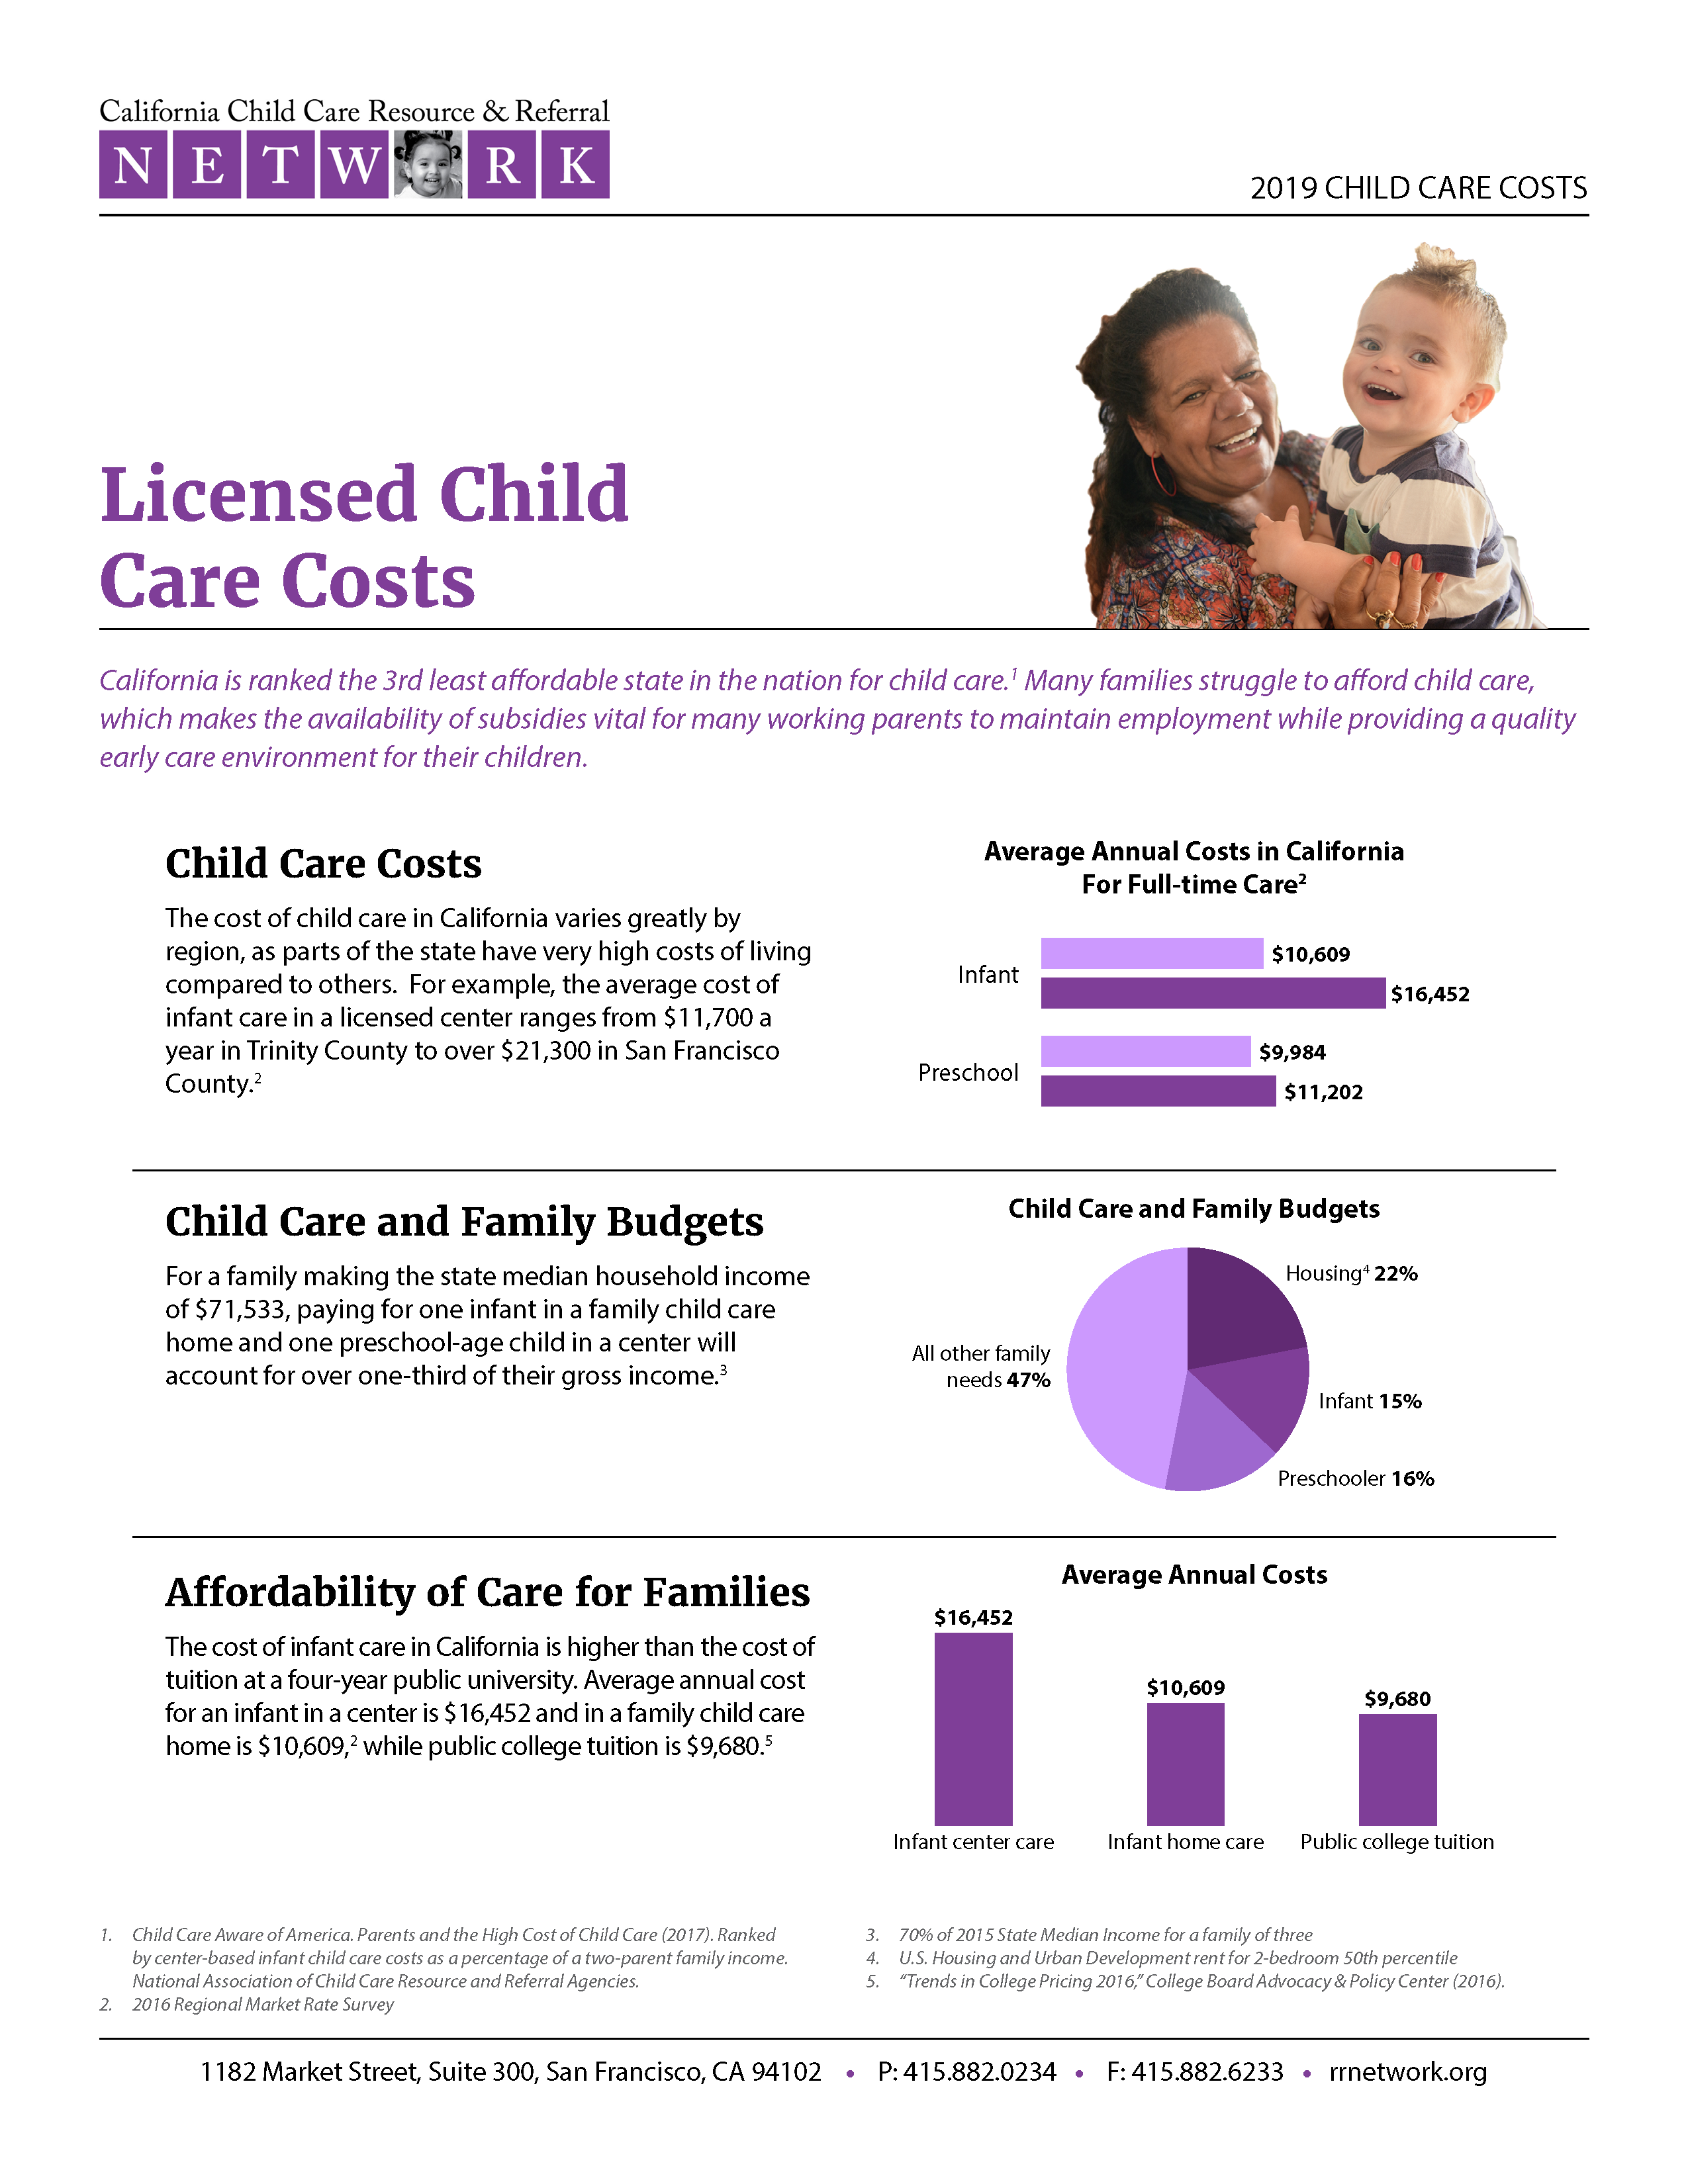 Licensed Child Care Costs